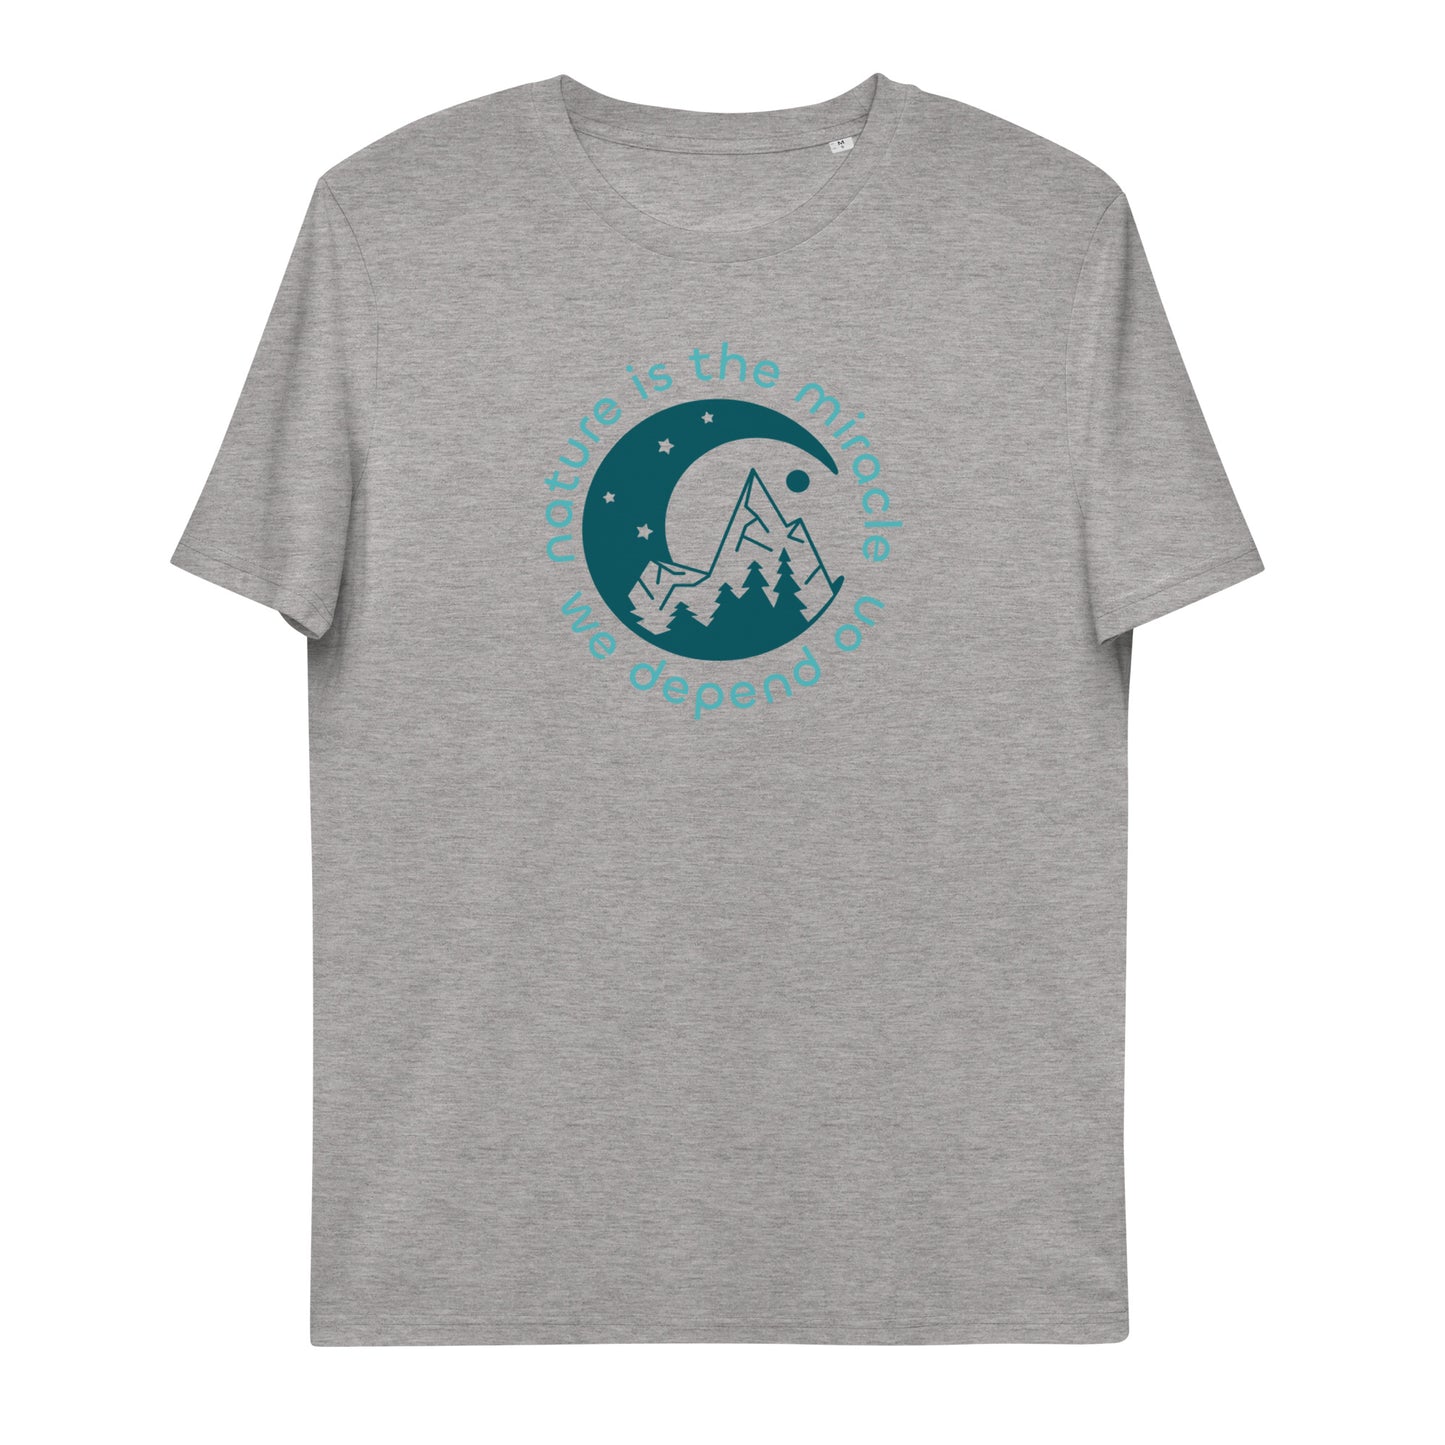 Unisex Organic Nature's Miracle T-shirt